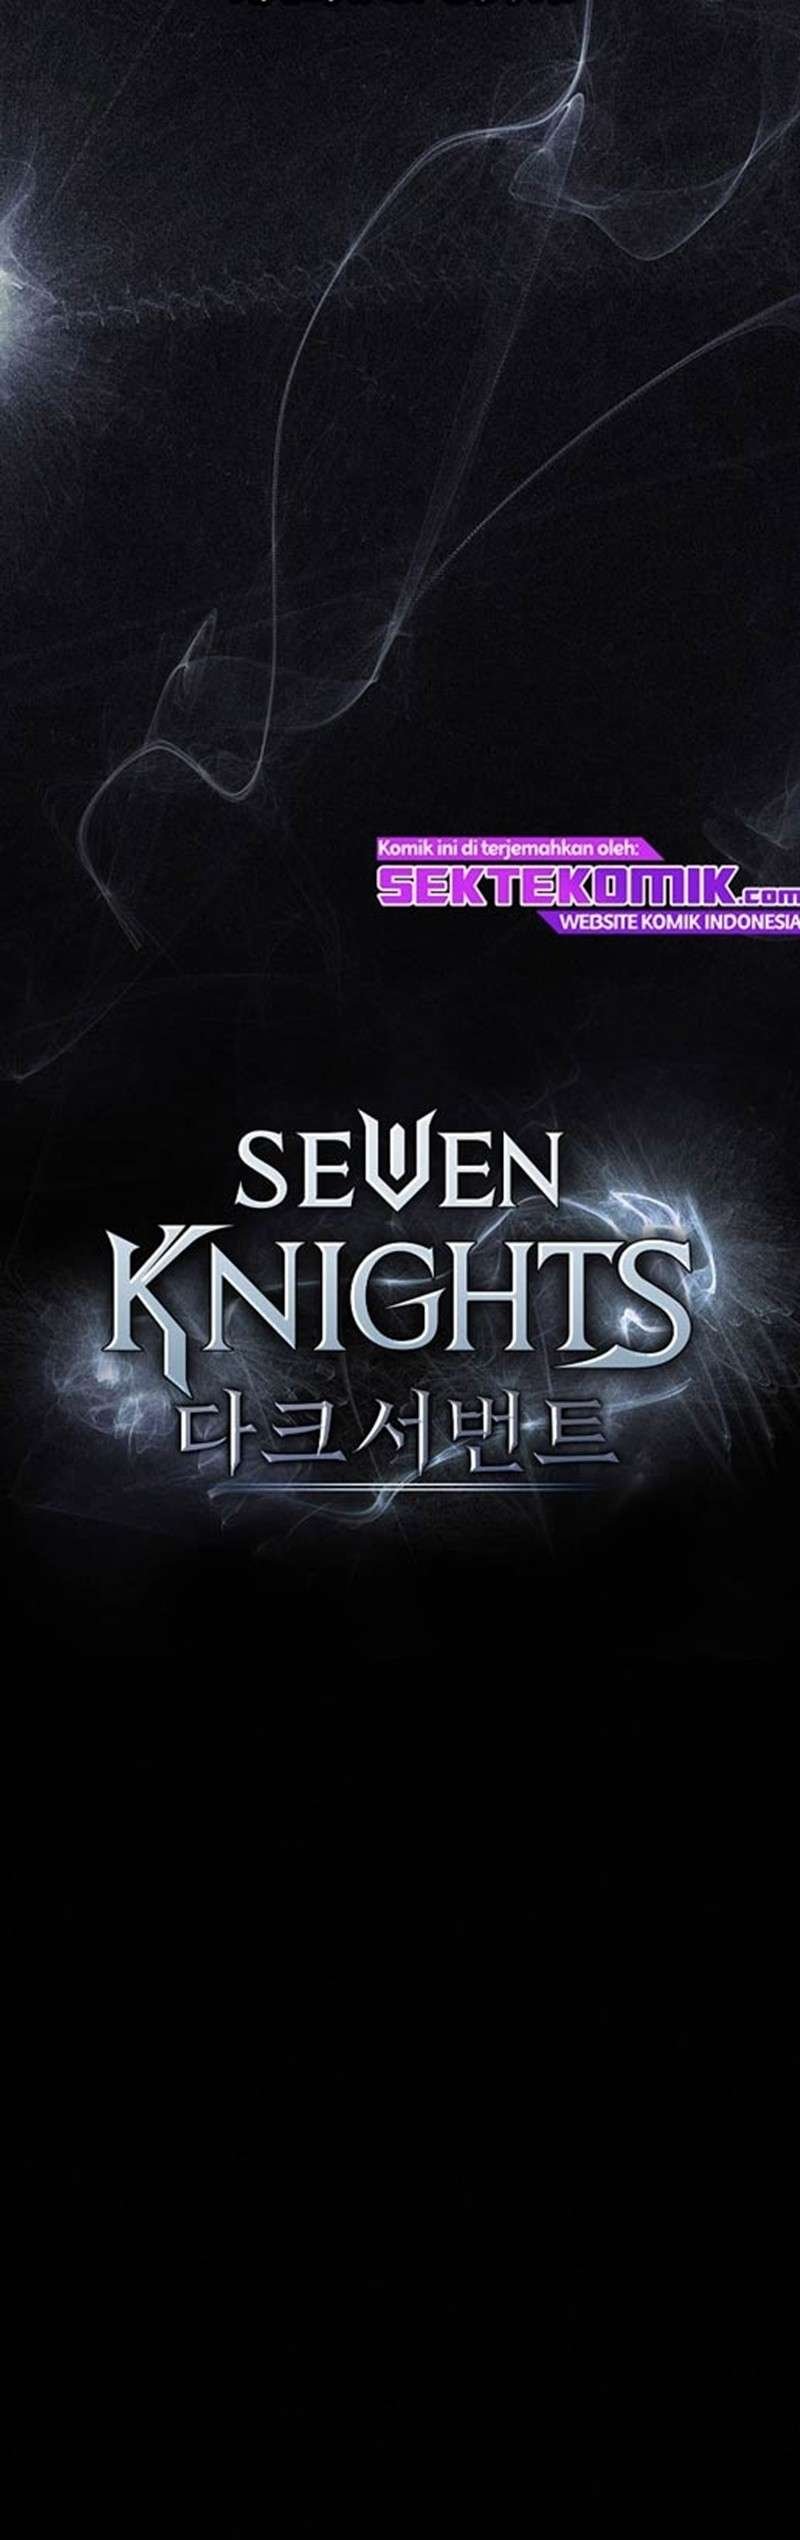 Baca Seven Knights: Dark Servant Chapter 0  - GudangKomik